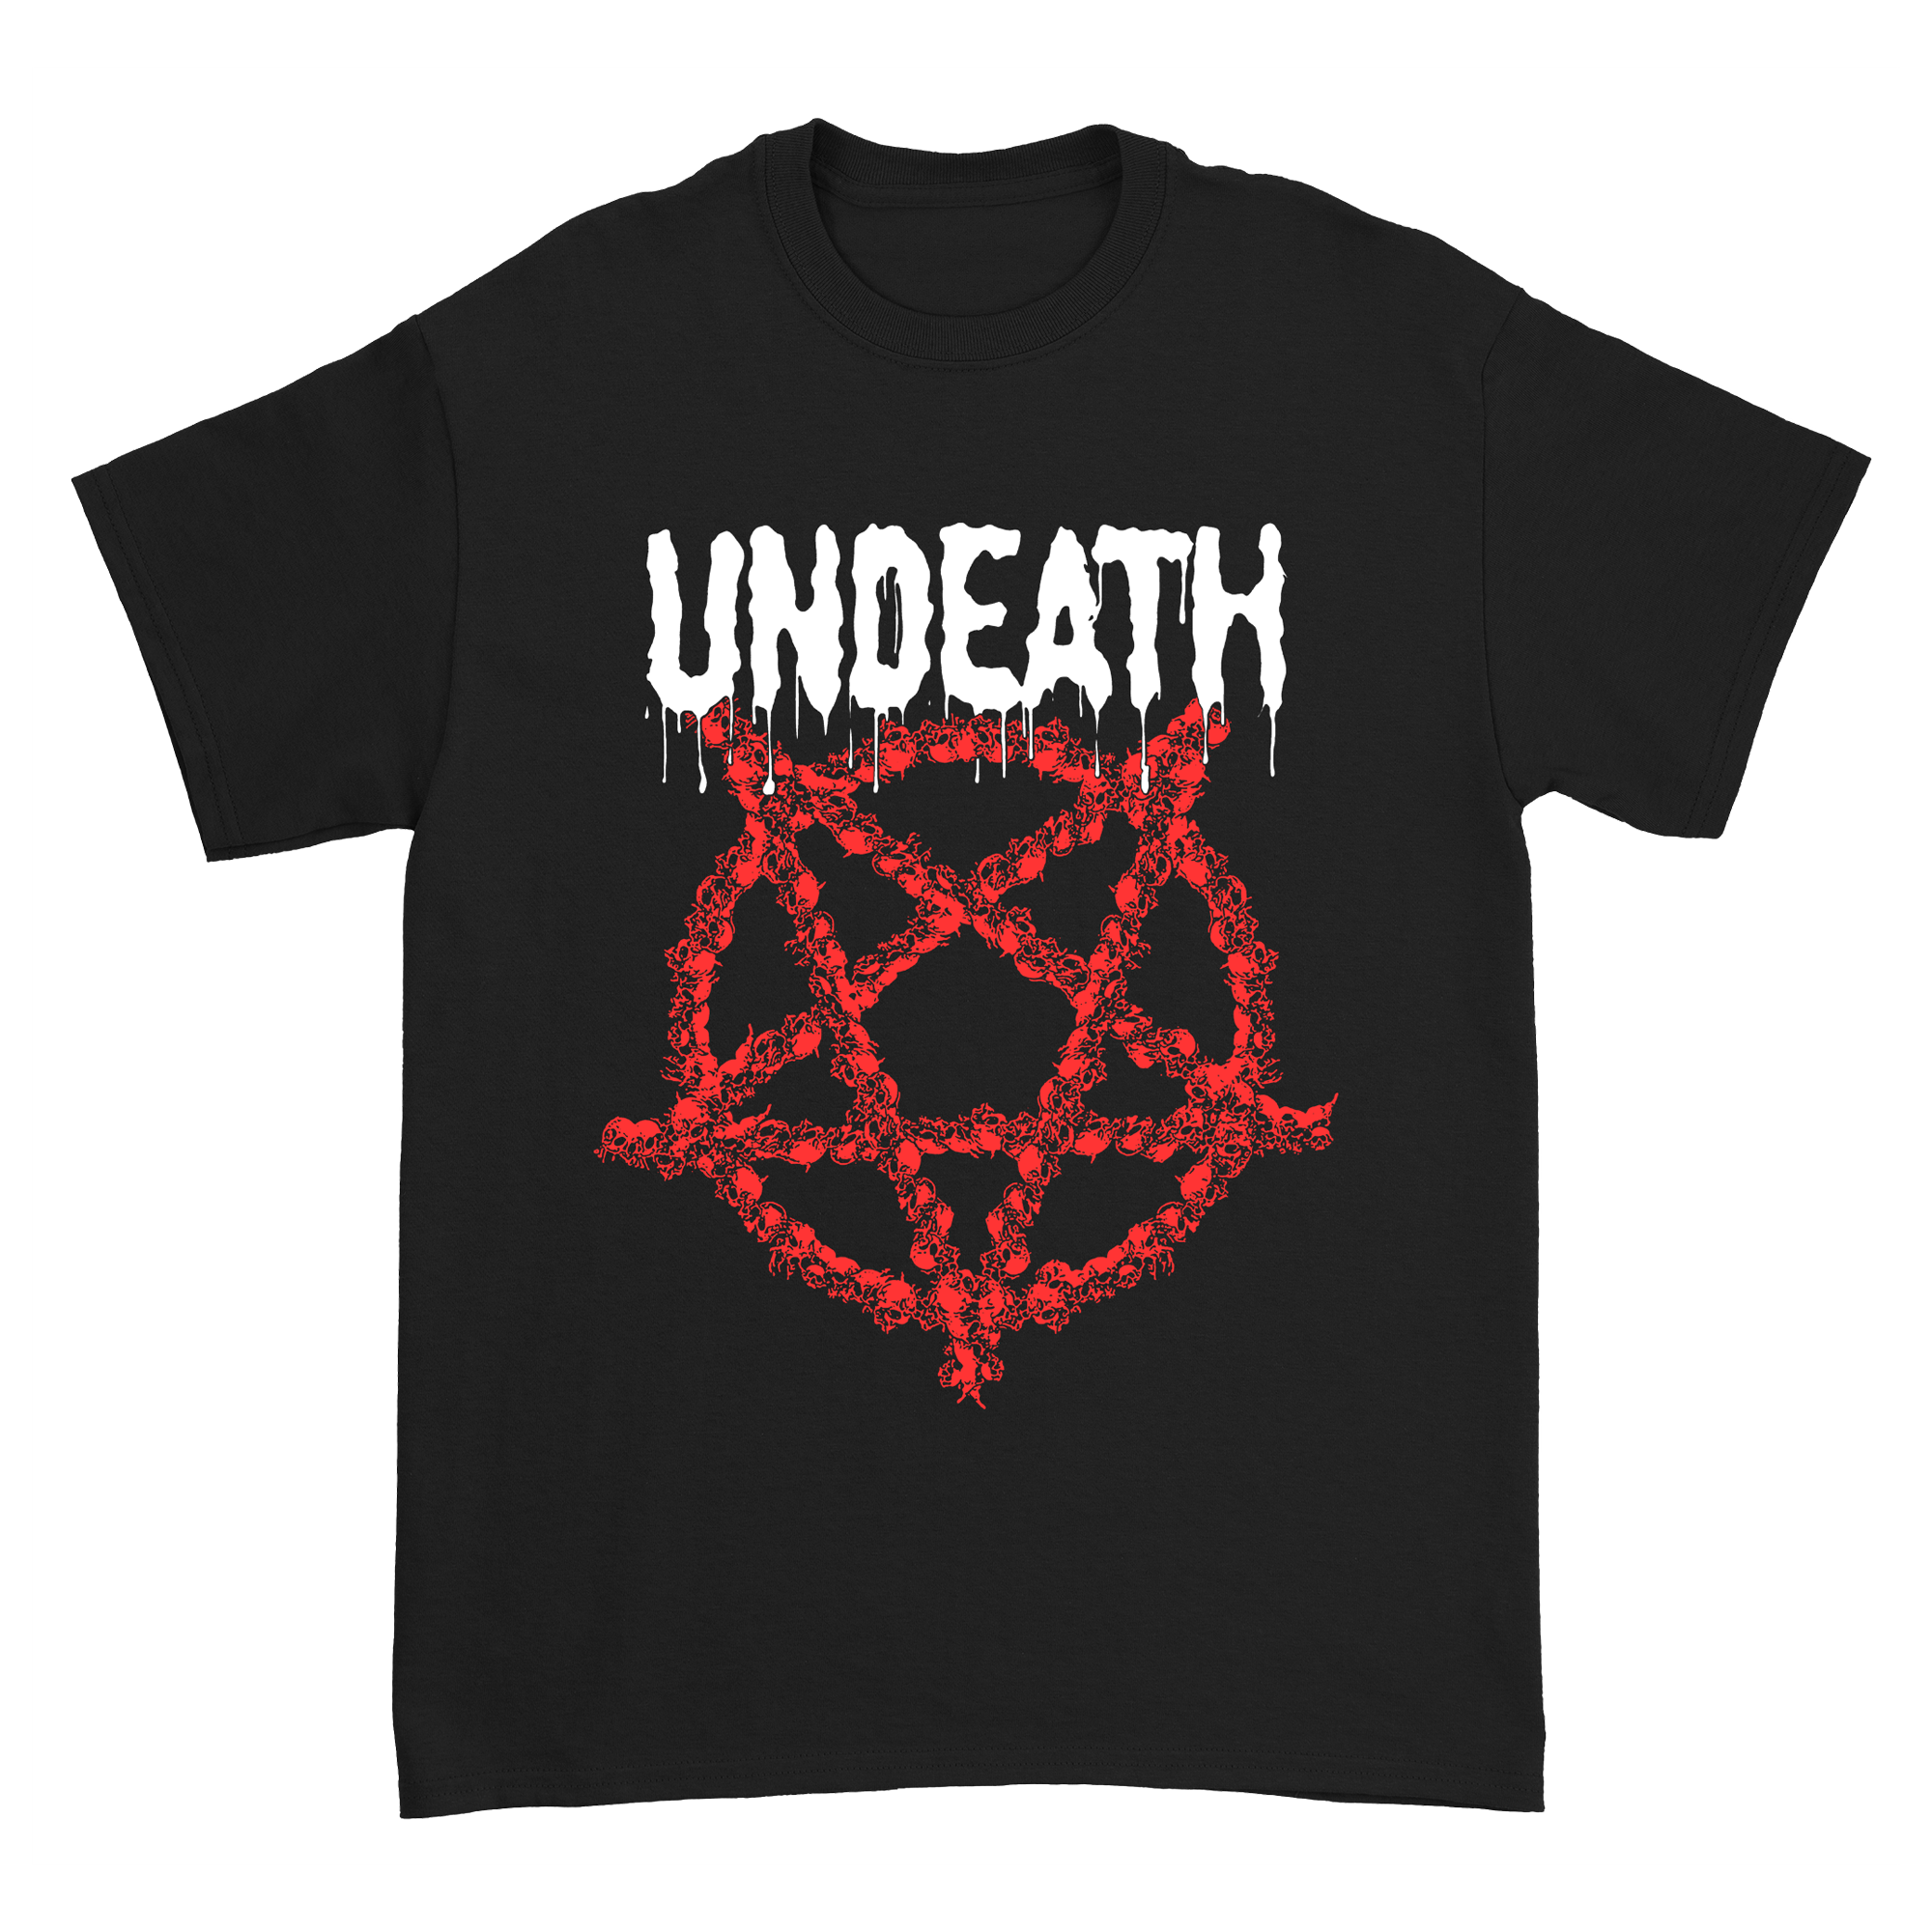 Skull Death Metal T-Shirt